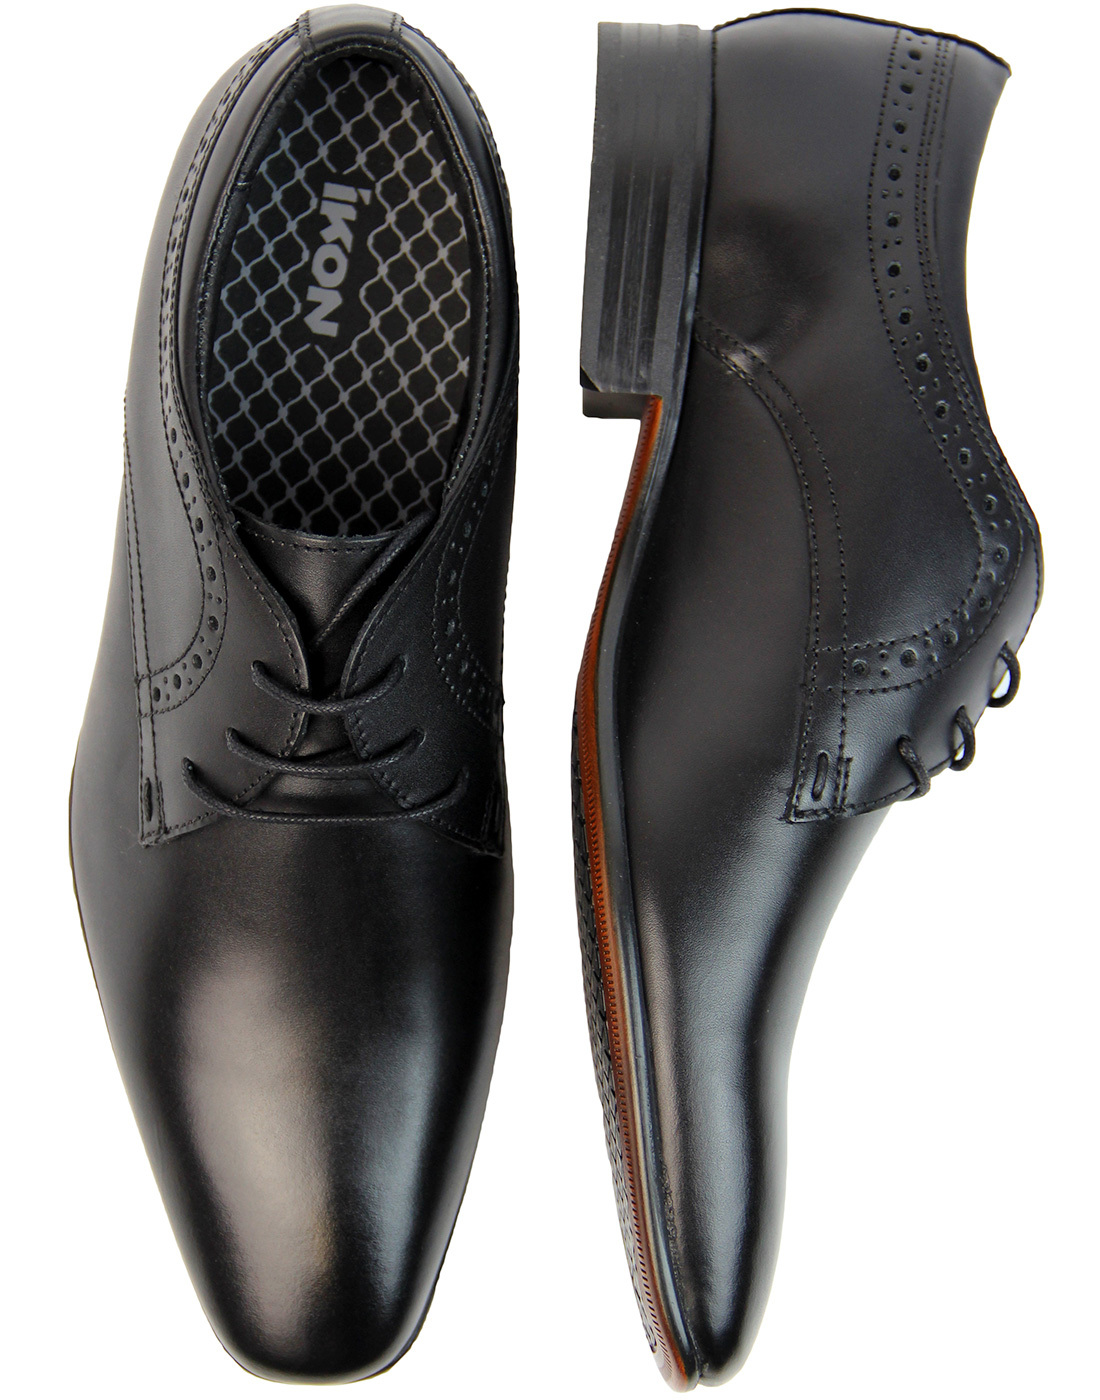 IKON Pullman Men's Retro Causal derby shoes in Black